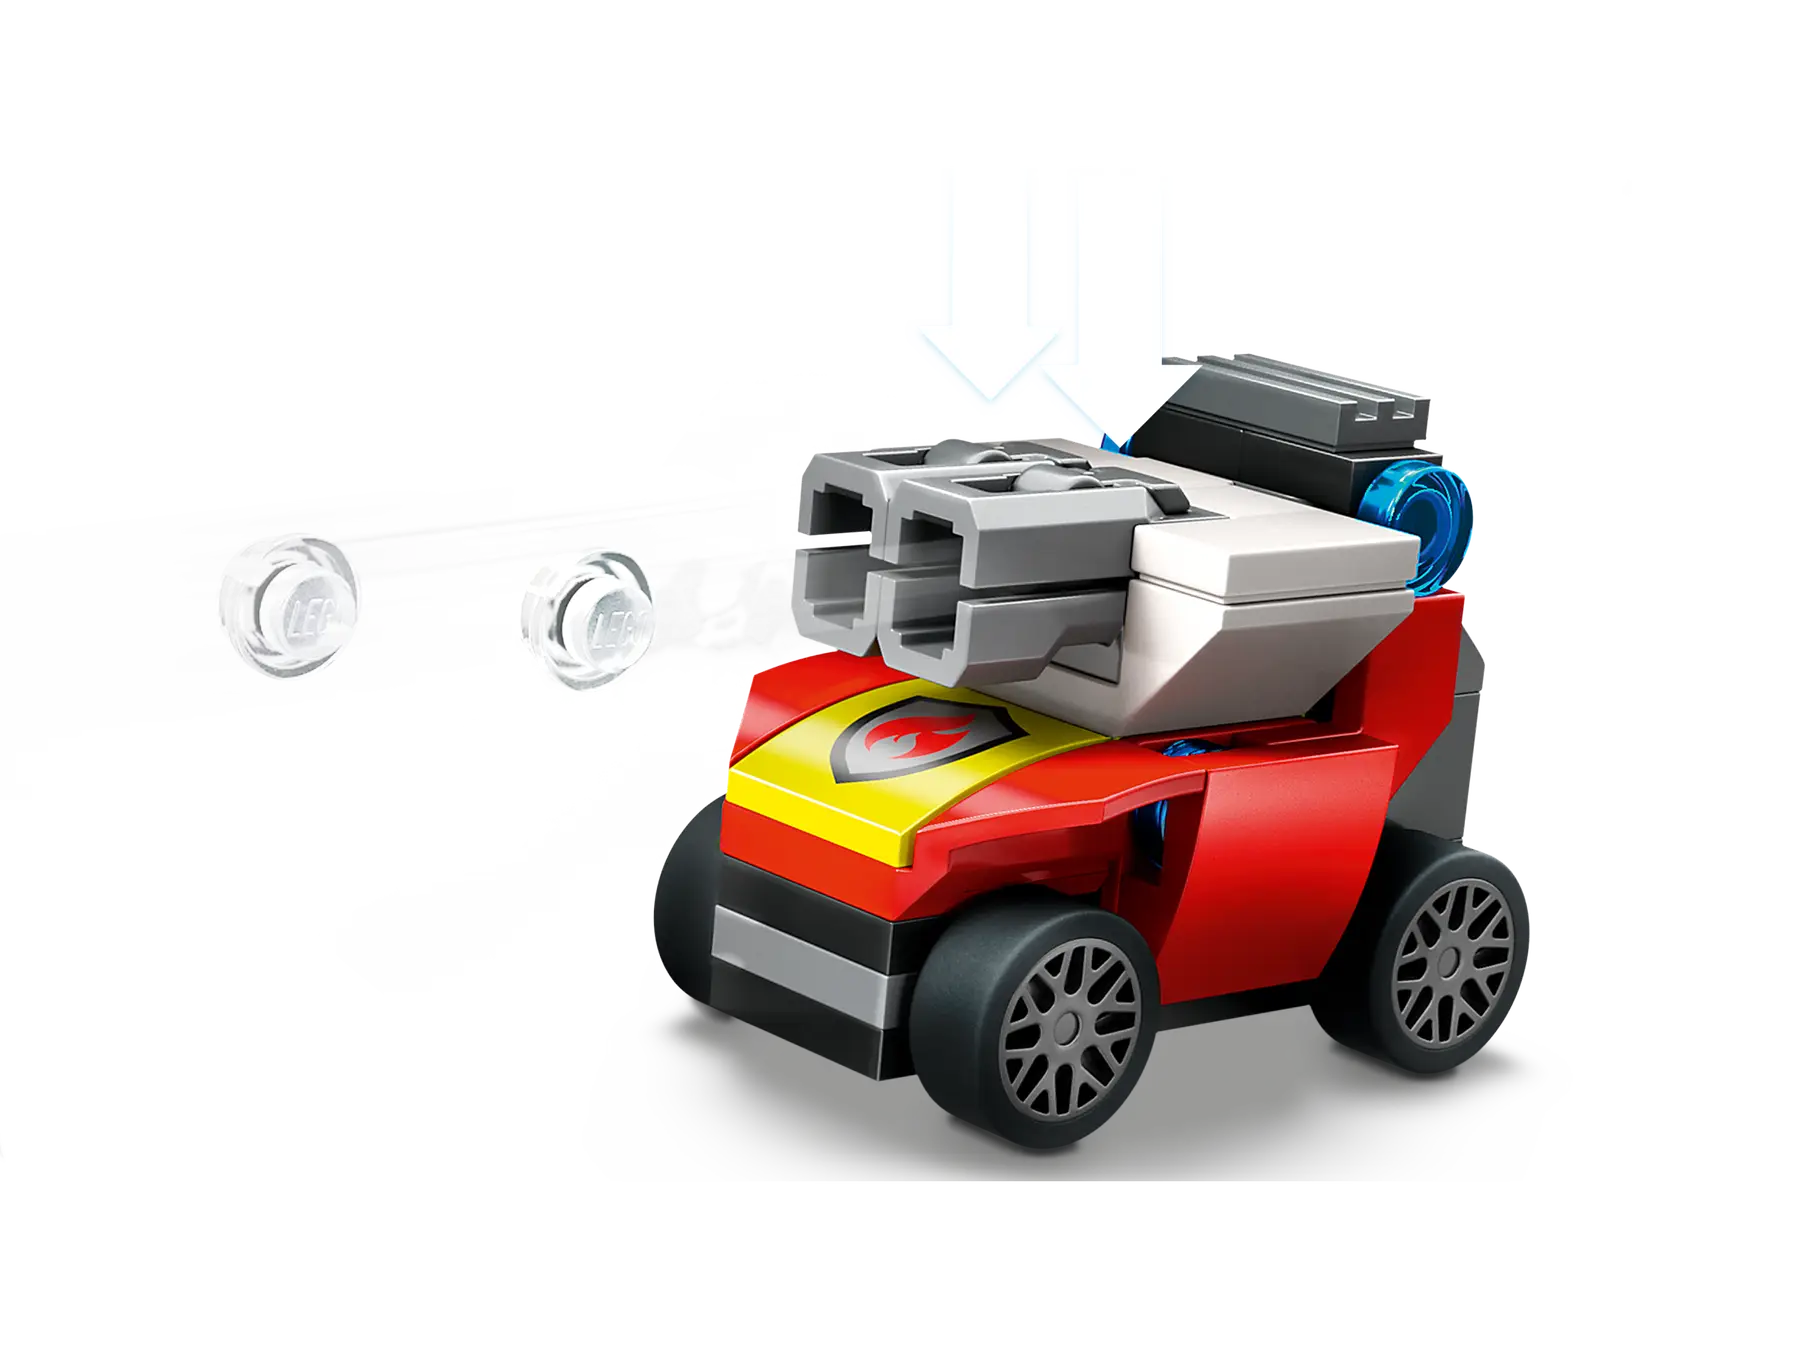 Lego City - Fire Command Truck